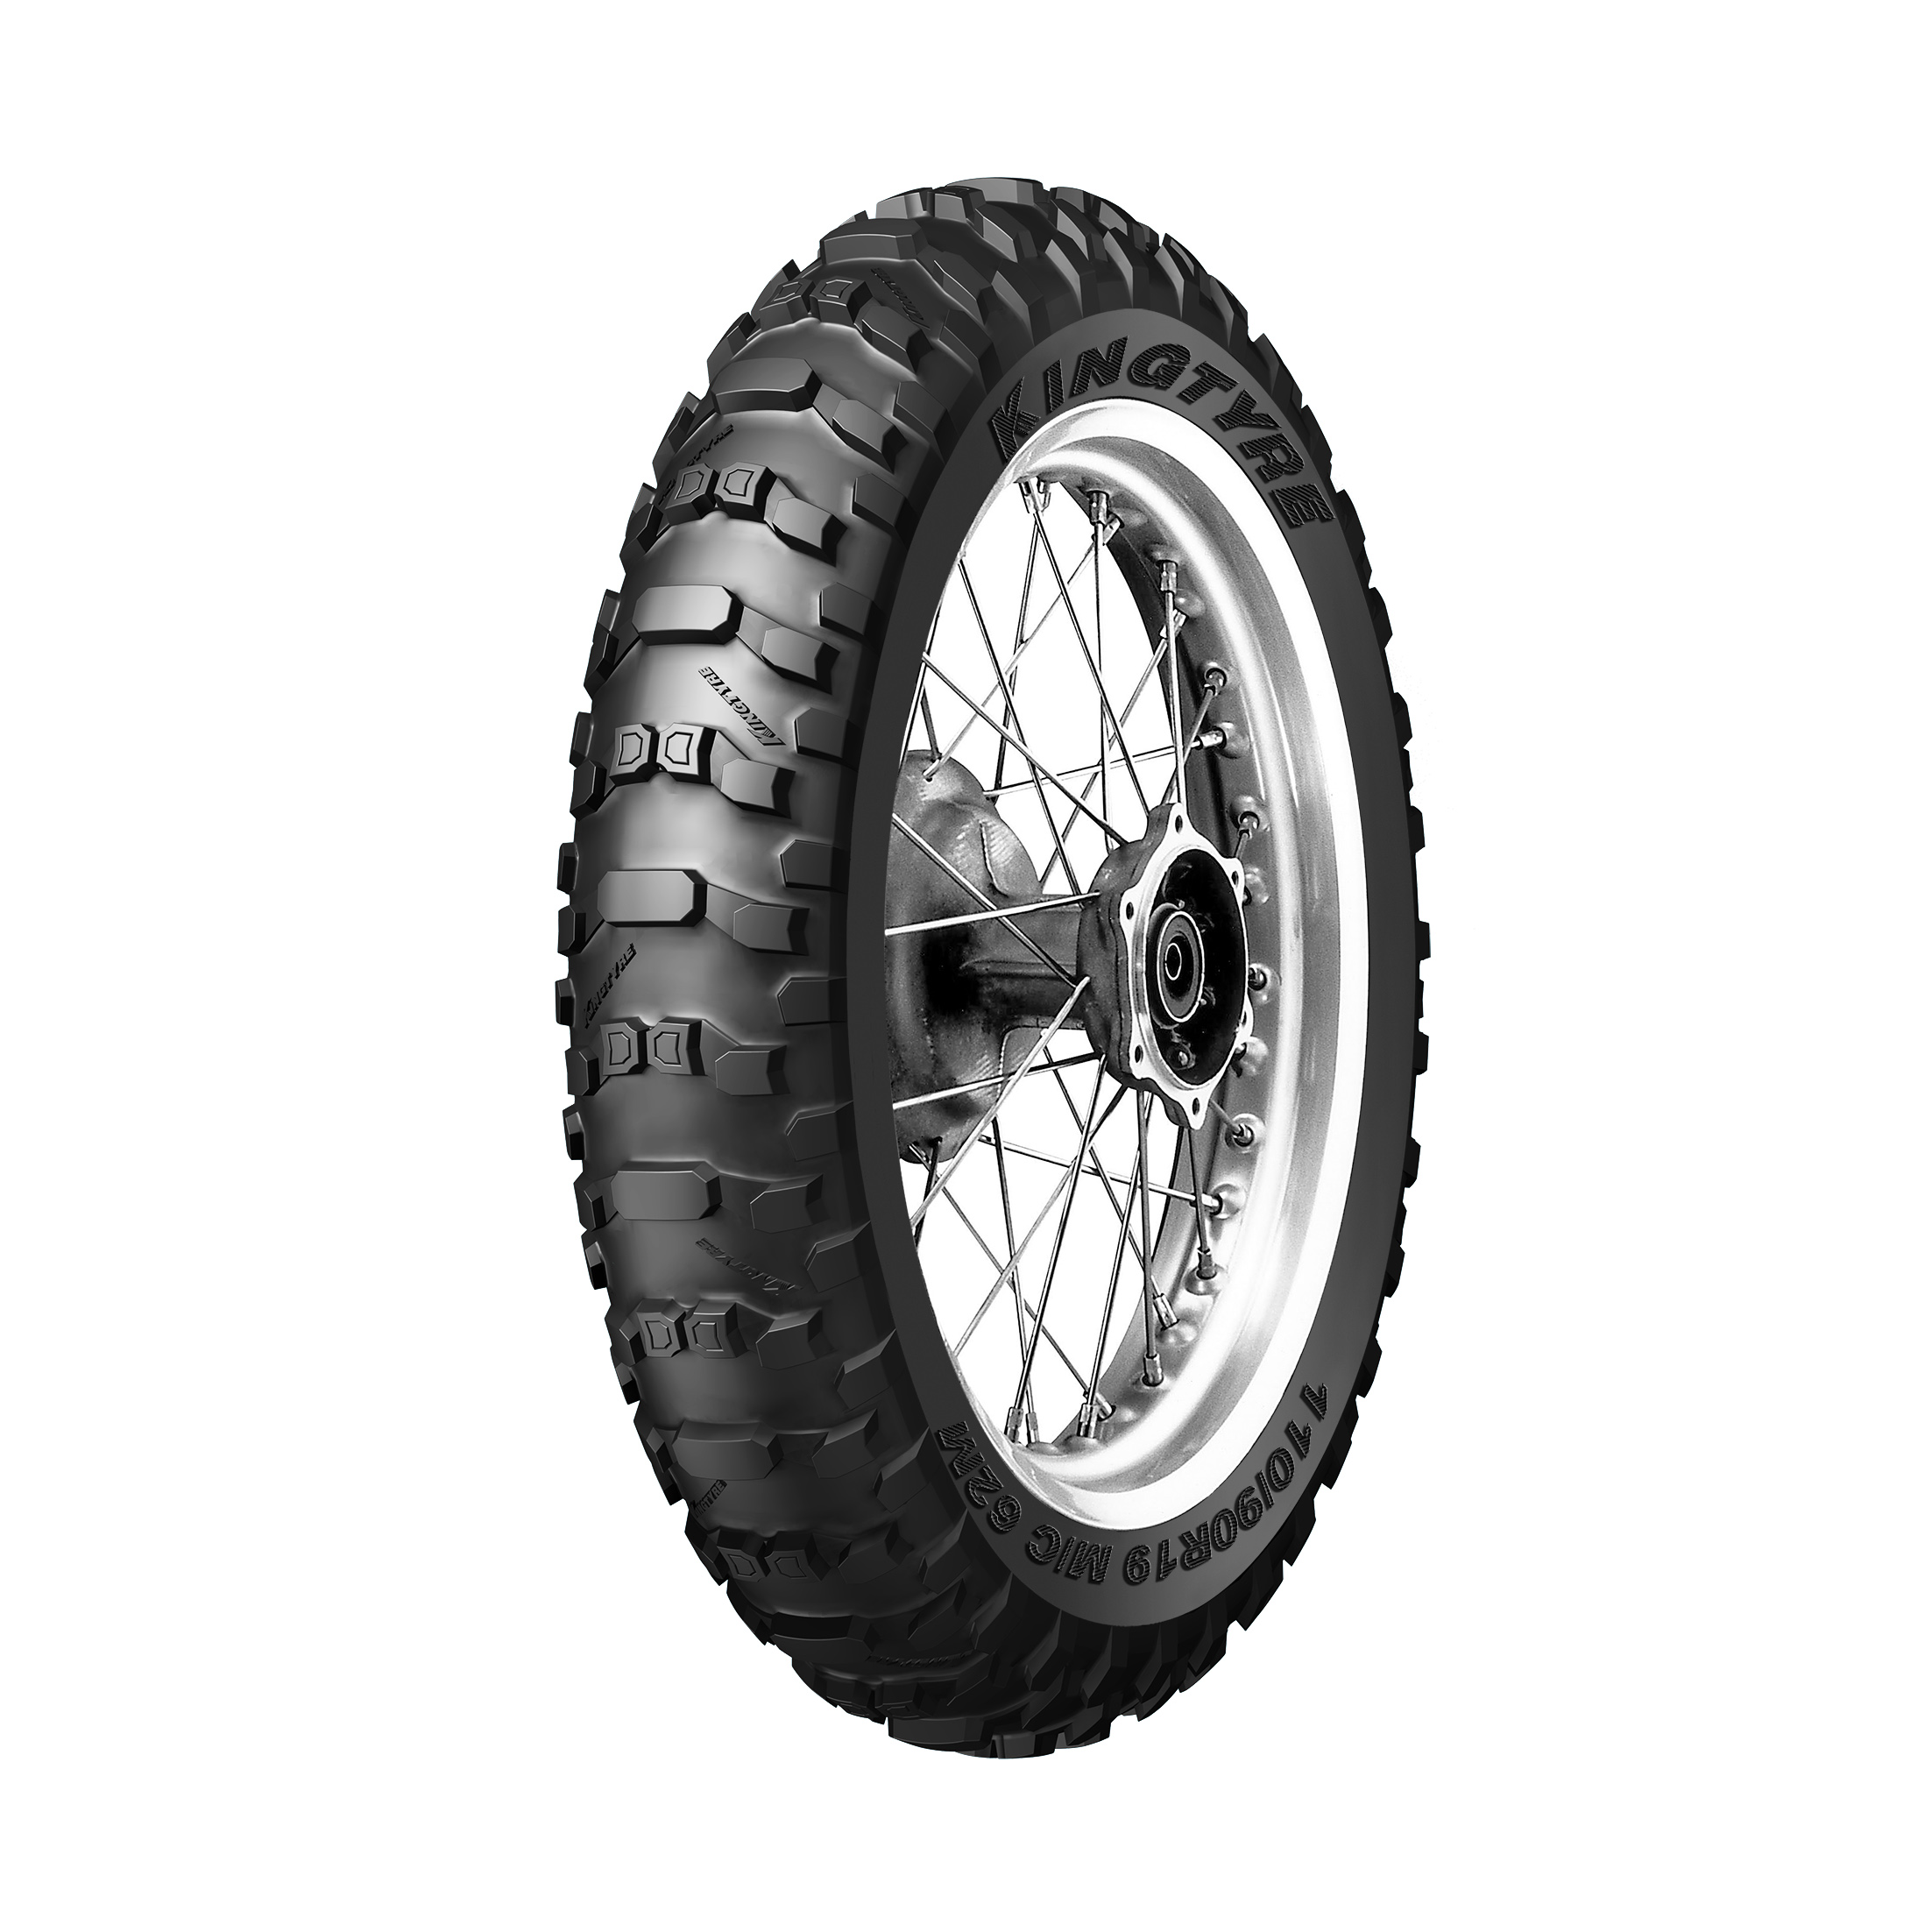 Discount Price 26 24 Bikes Tyre -
 MOTOCROSS OFF ROAD TIRE K83 – Willing